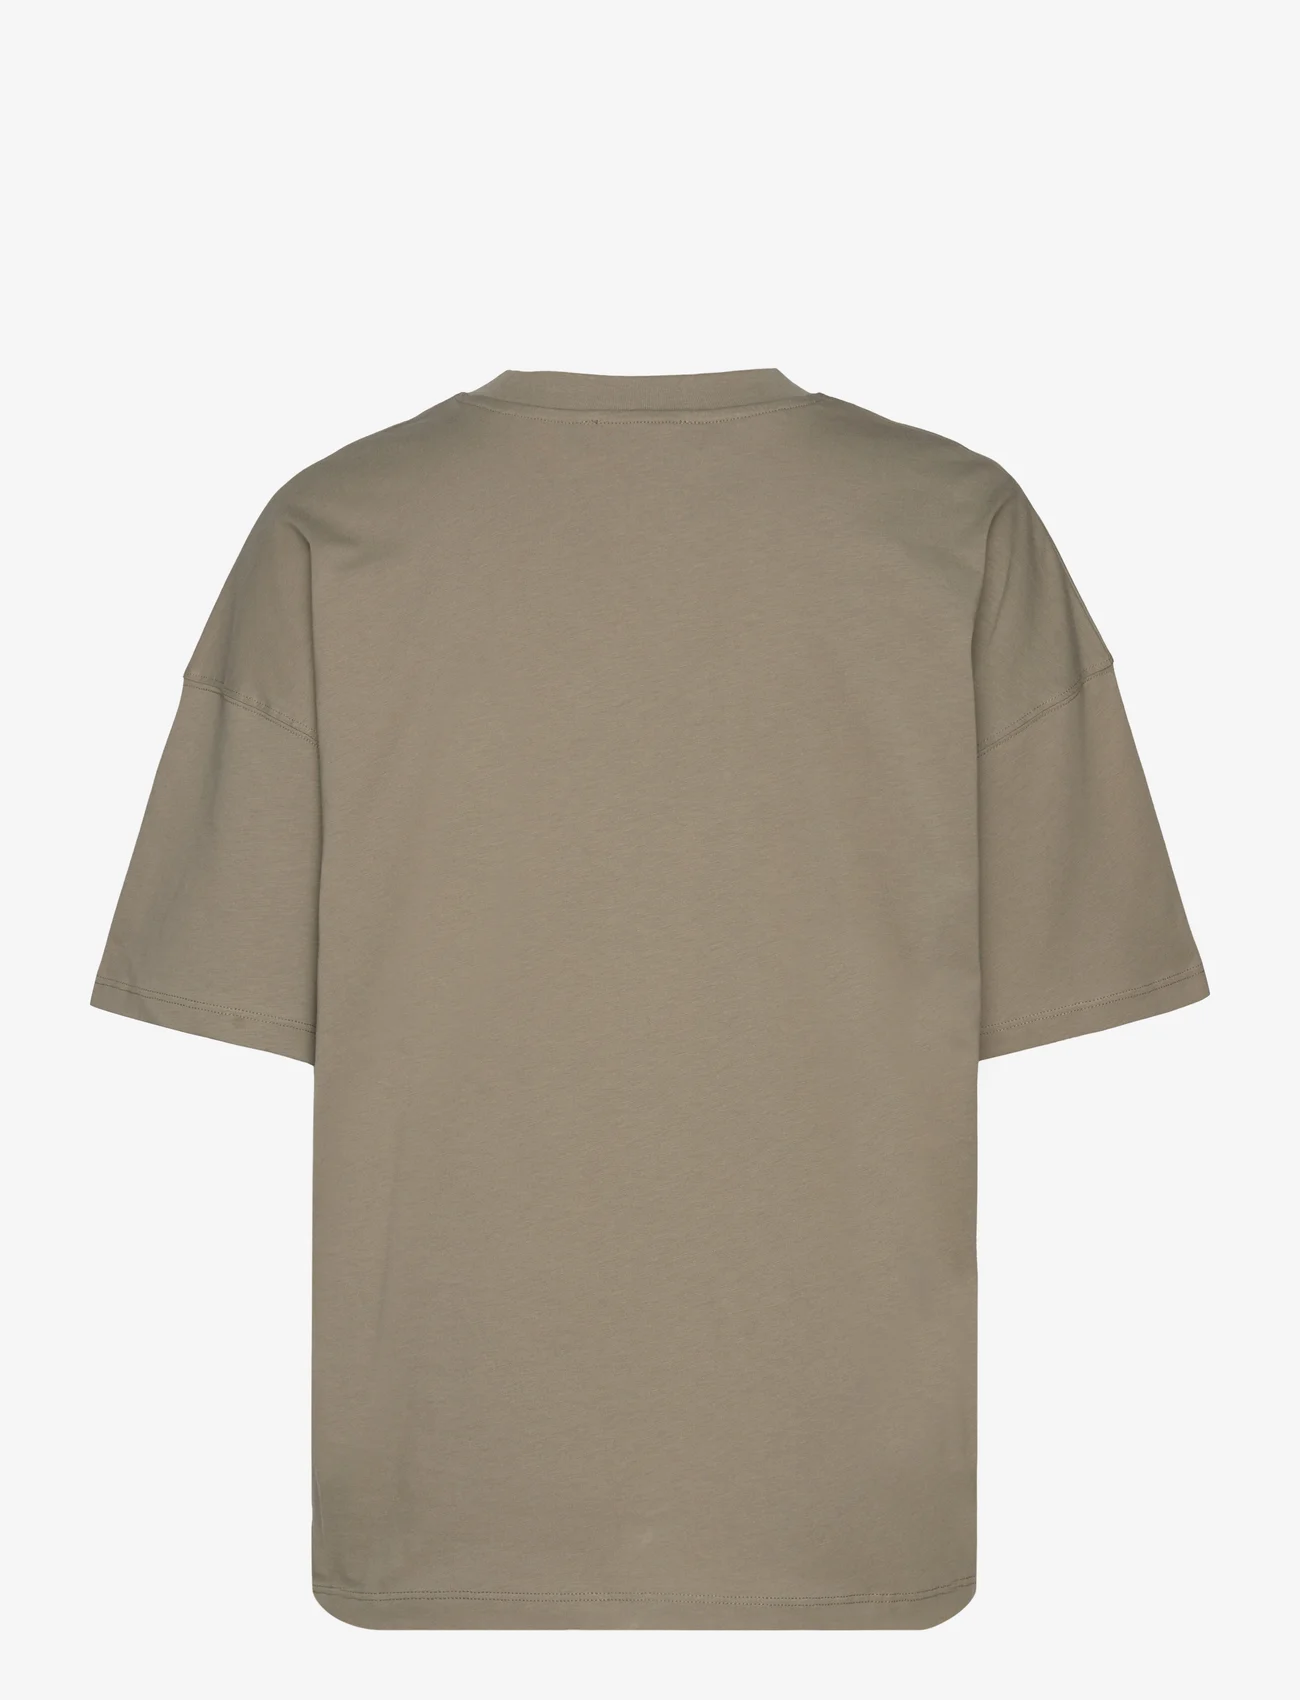 Munthe - GUROZO - t-shirts - army - 1